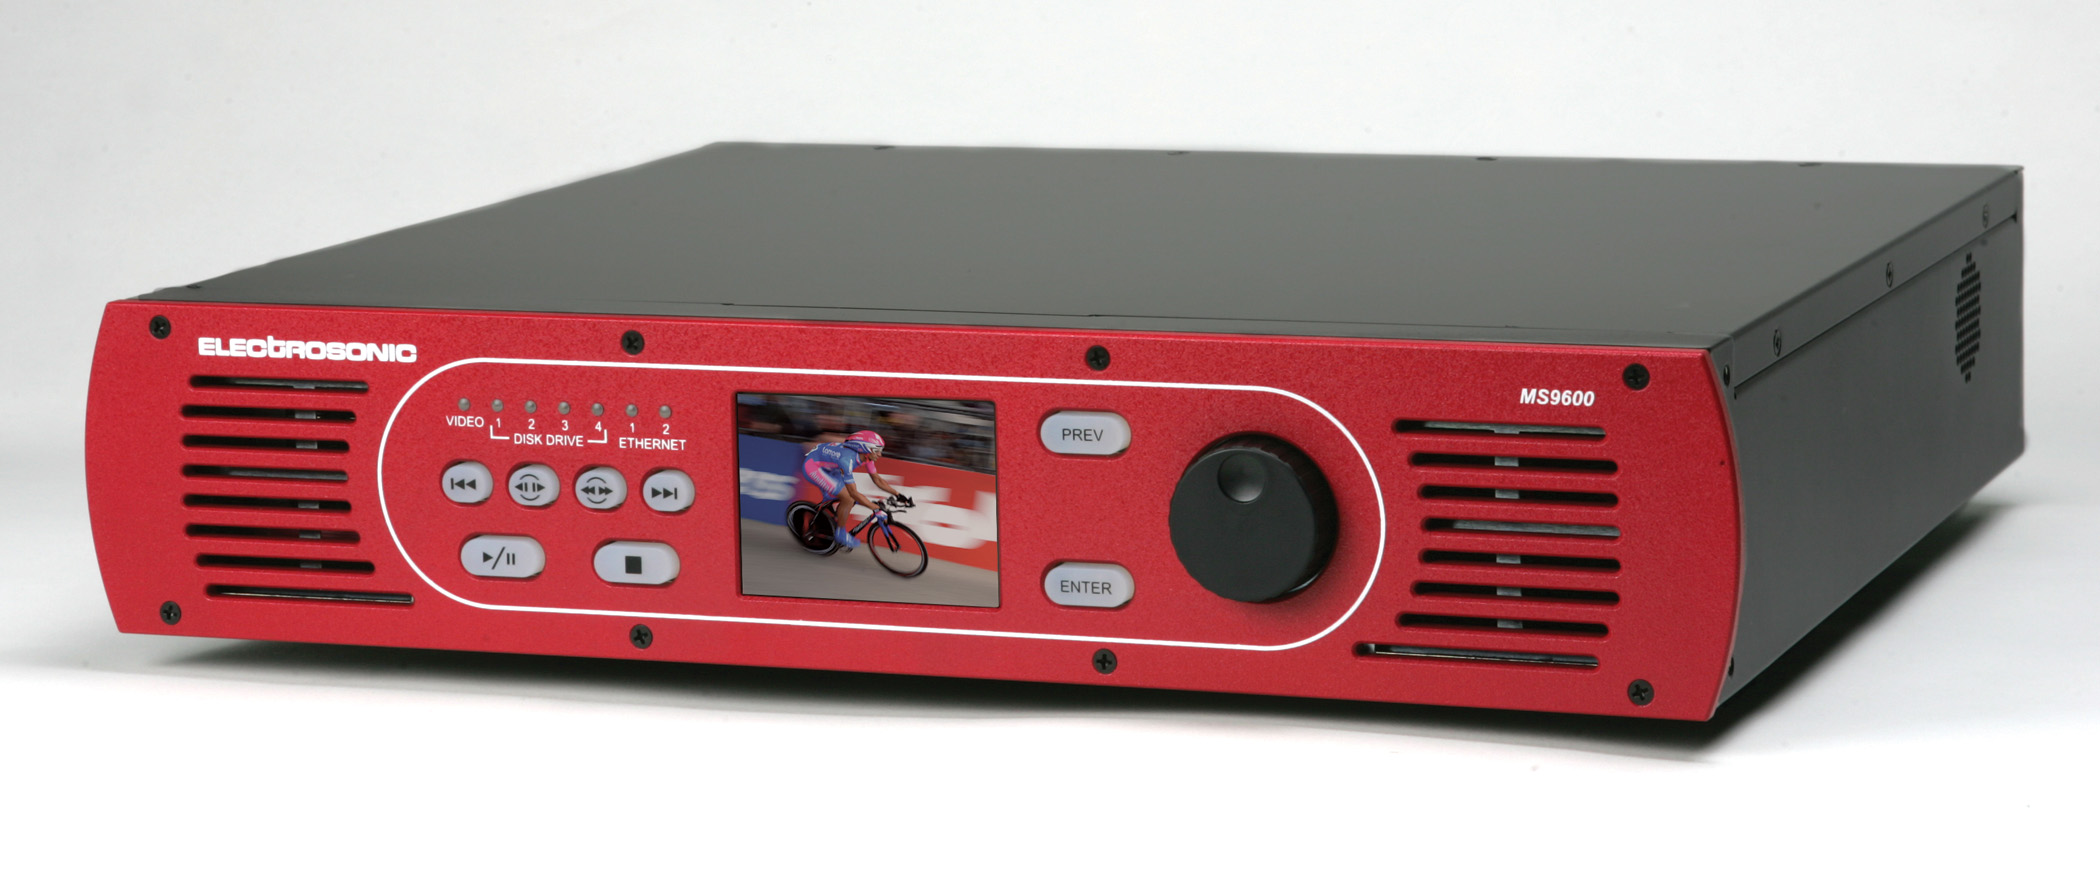 Electrosonic's New ES9600 JPEG2000 Video Player Brings